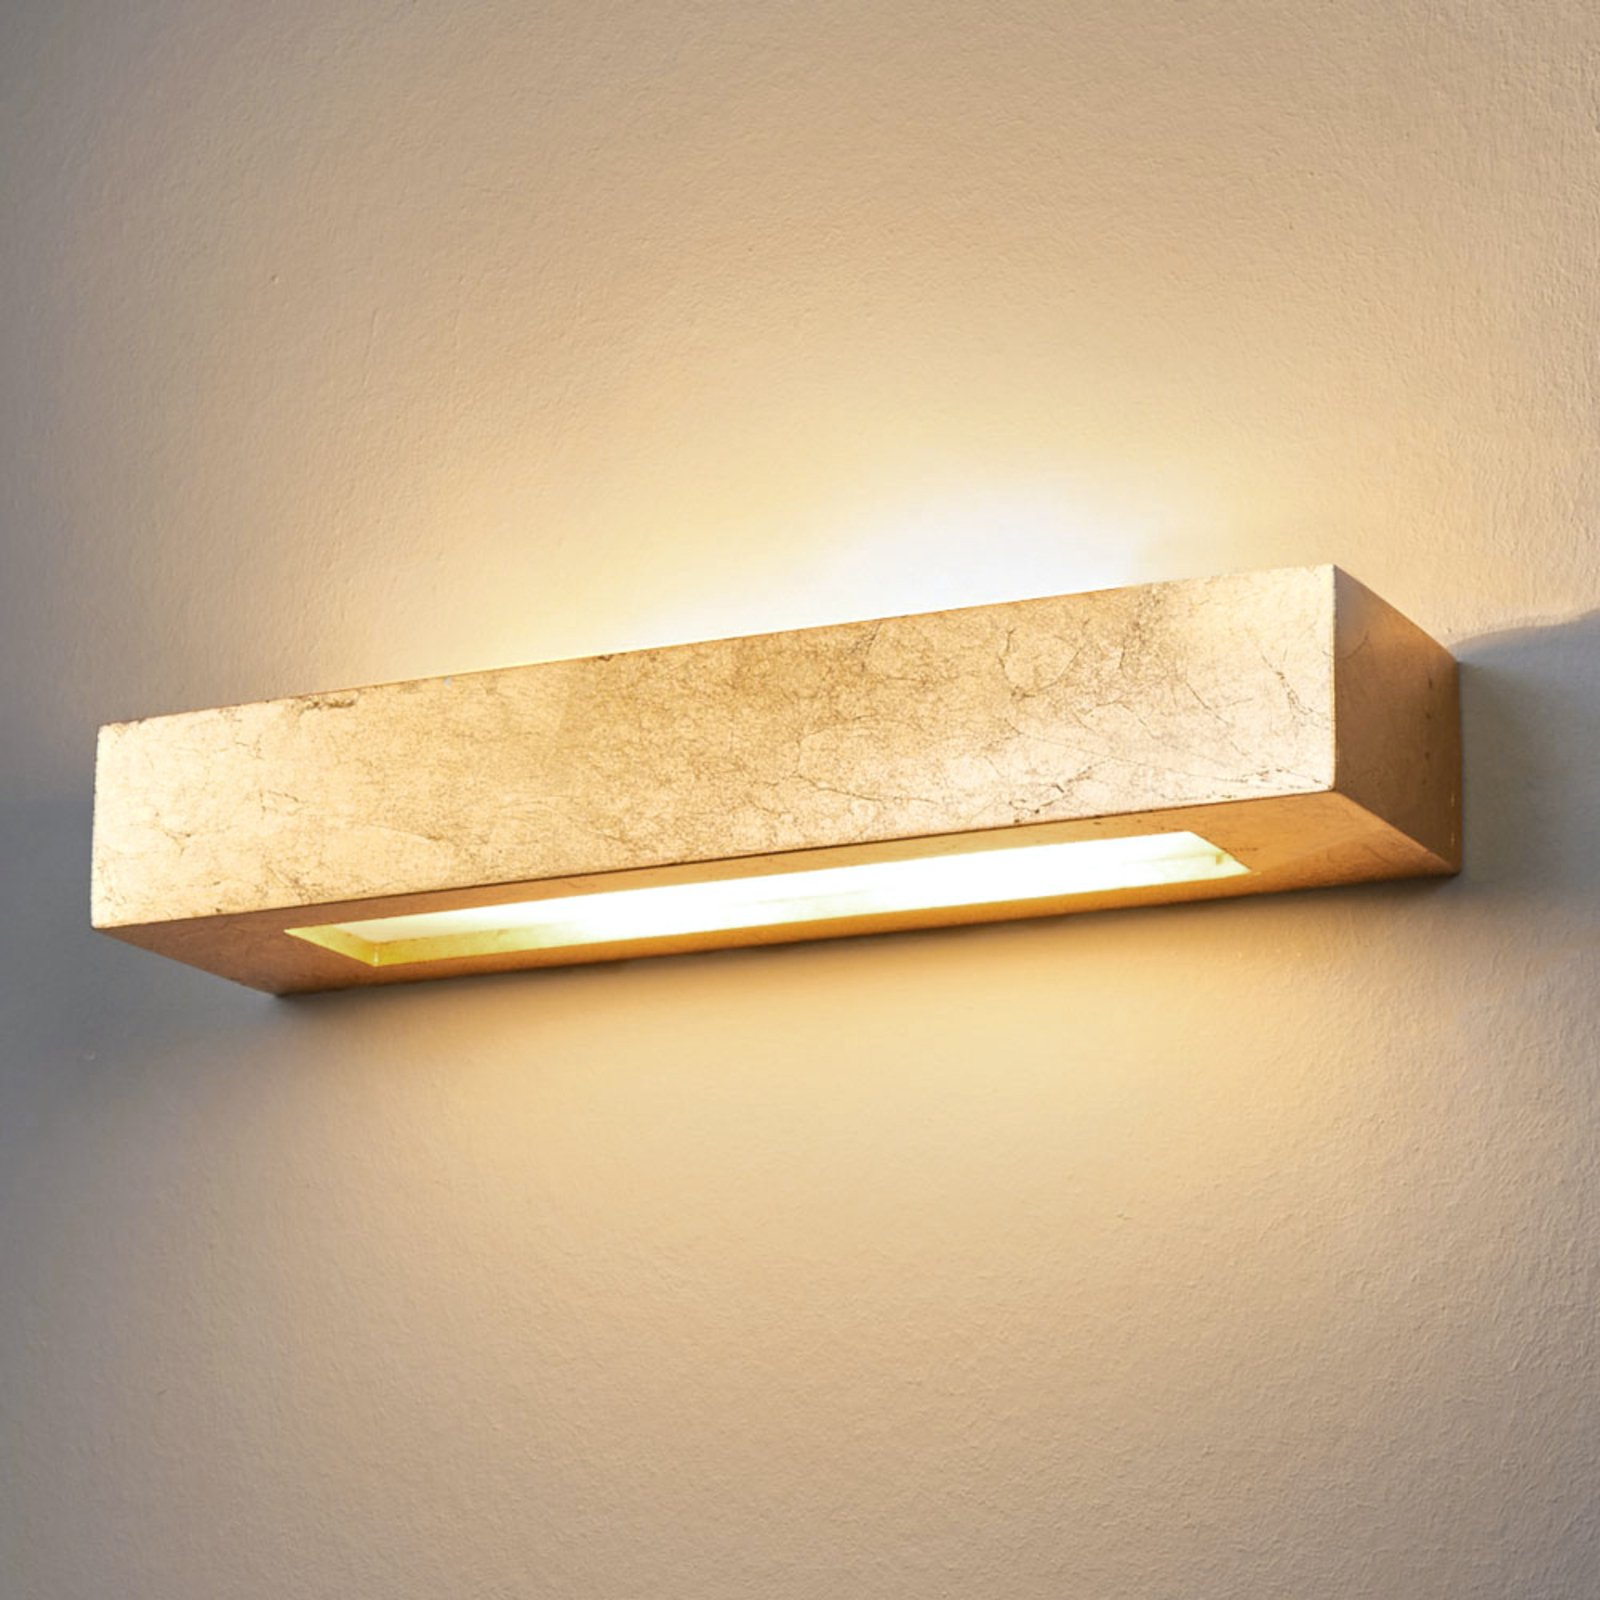 Angular plaster wall light Emina in gold